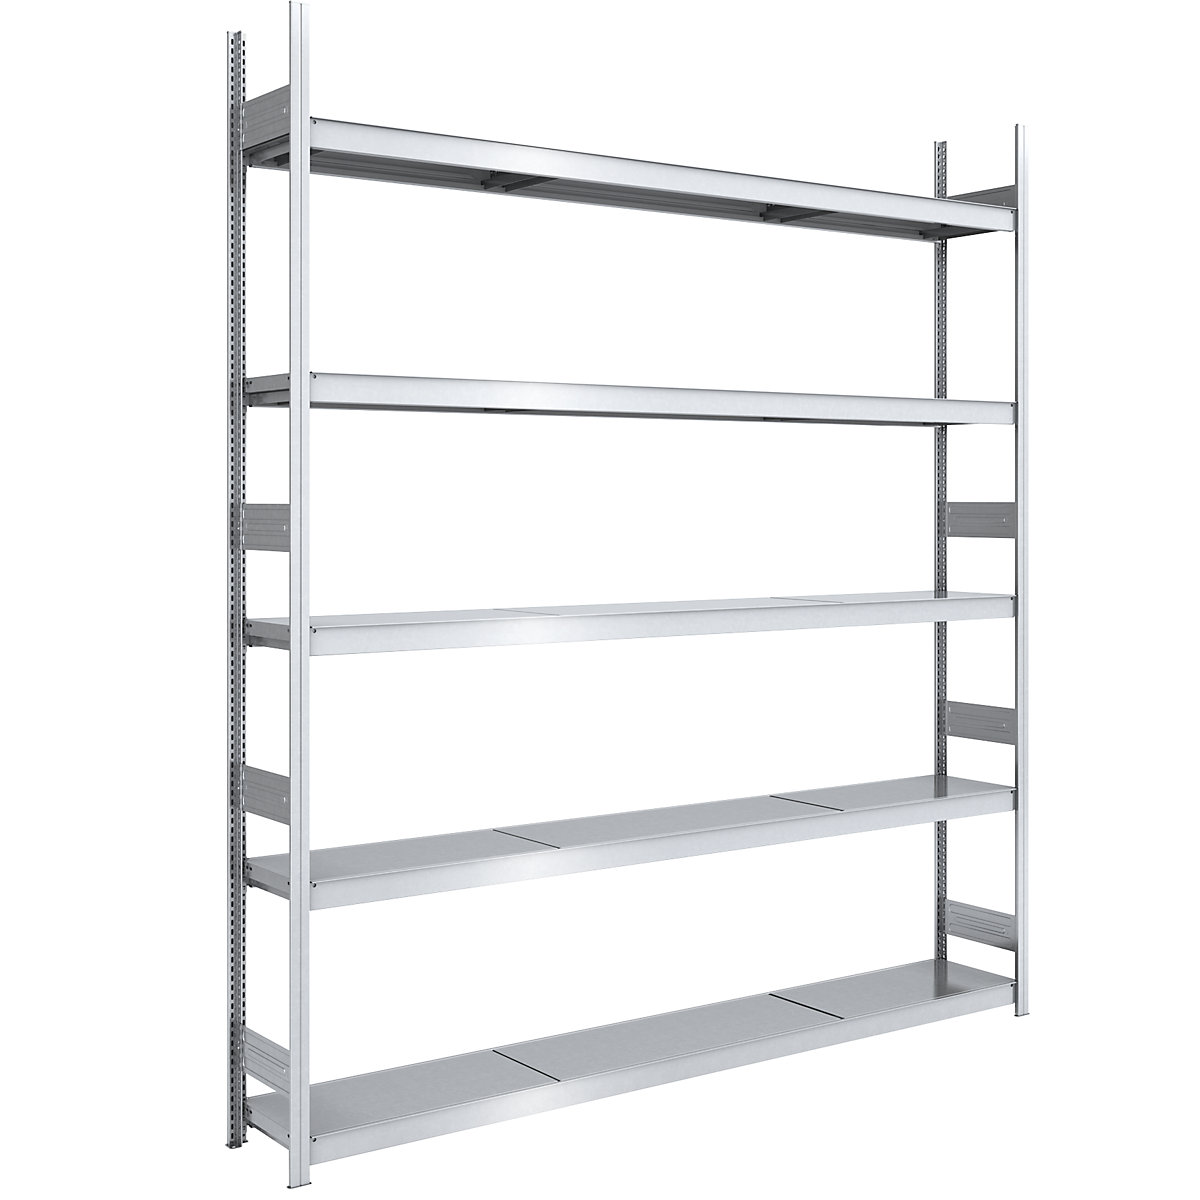 Wide span boltless shelving unit, zinc plated – hofe, shelf WxD 2500 x 400 mm, standard shelf unit, 5 steel shelves, height 3000 mm